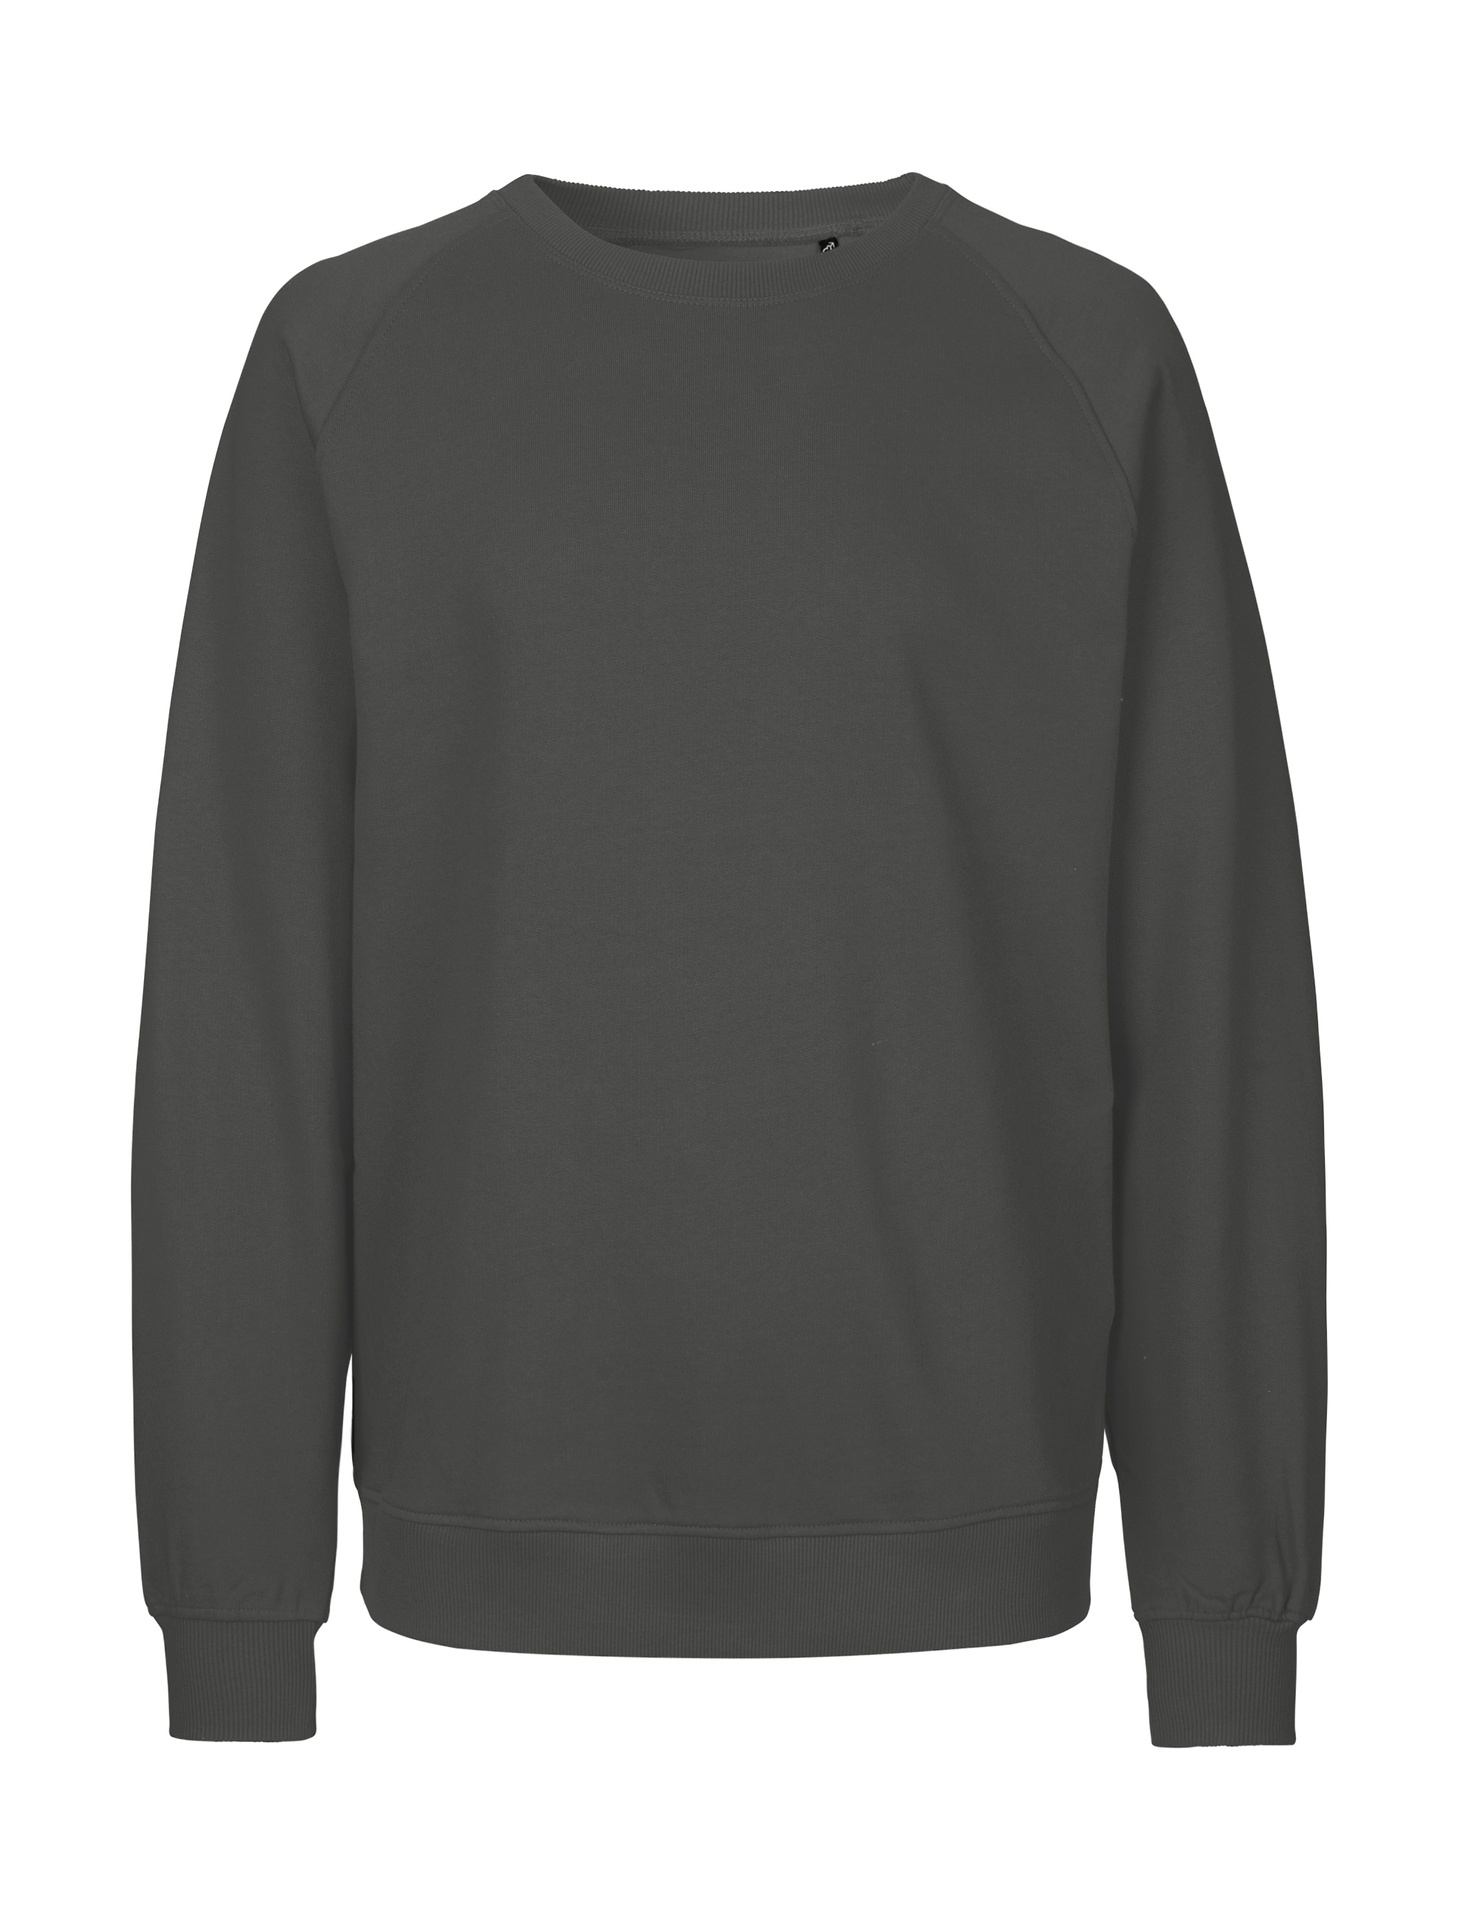 [PR/02693] Unisex Sweatshirt (Charcoal 06, 2XL)